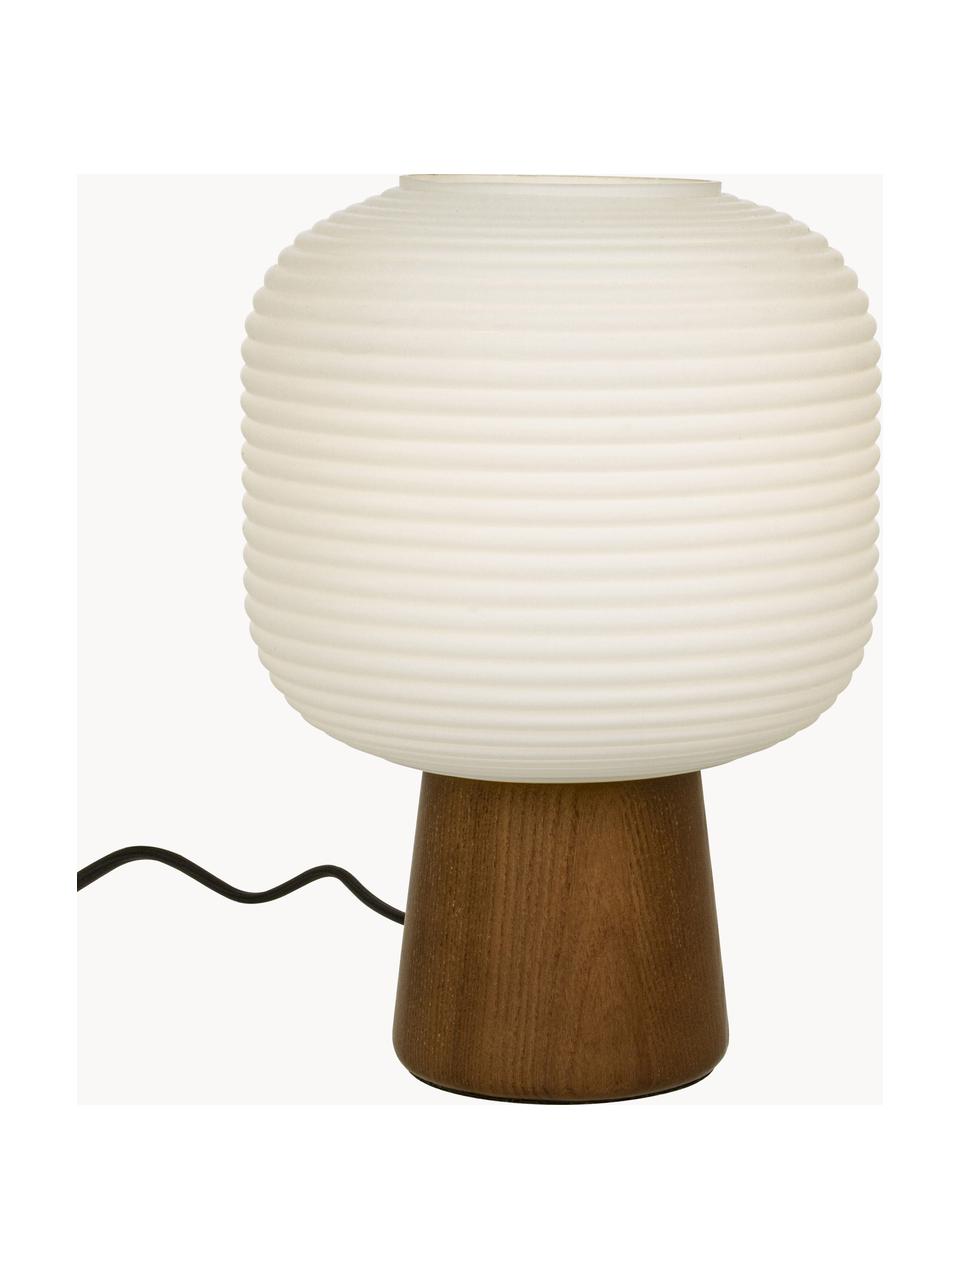 Malá stolní lampa Aura, Hnědá, bílá, Ø 20 cm, V 29 cm